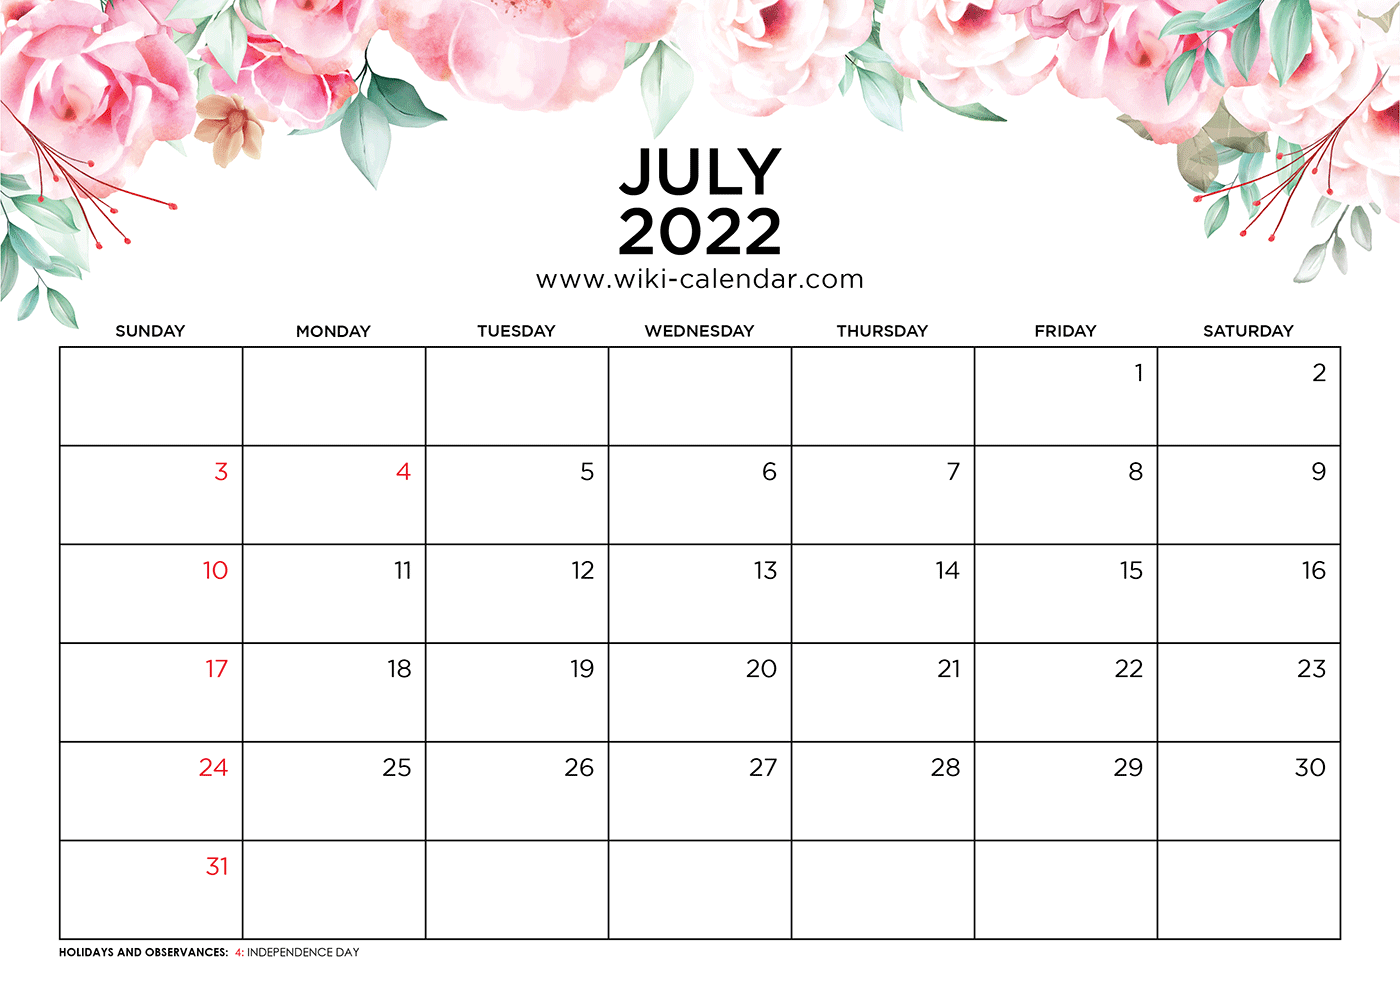 free-printable-july-2022-calendars-wiki-calendar-july-2022-calendars-33-free-printables